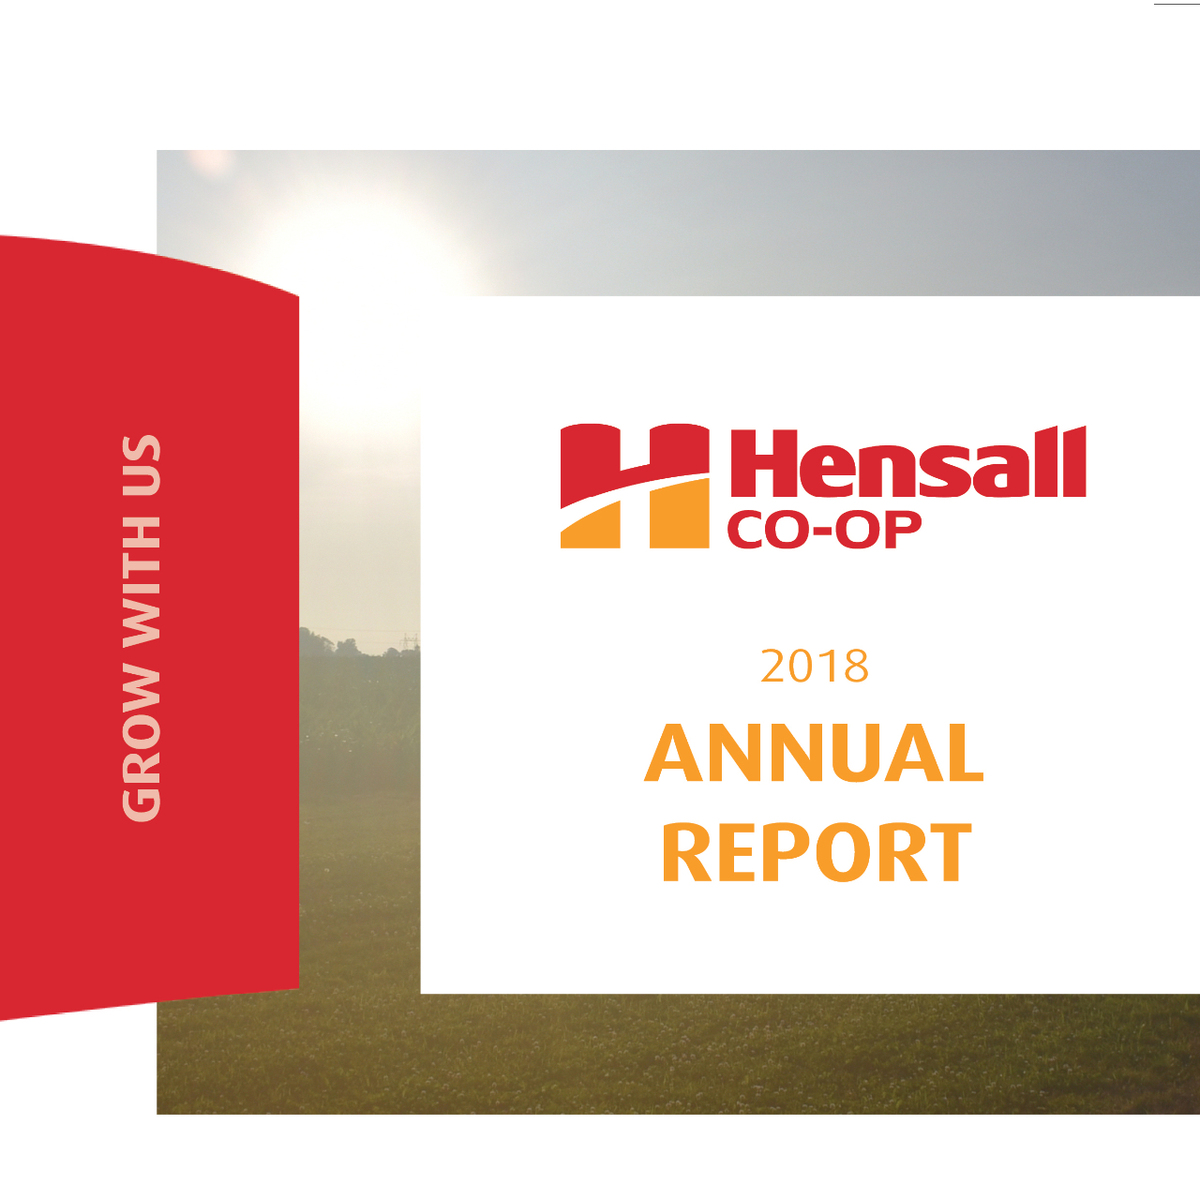 2018 Annual Report cover 